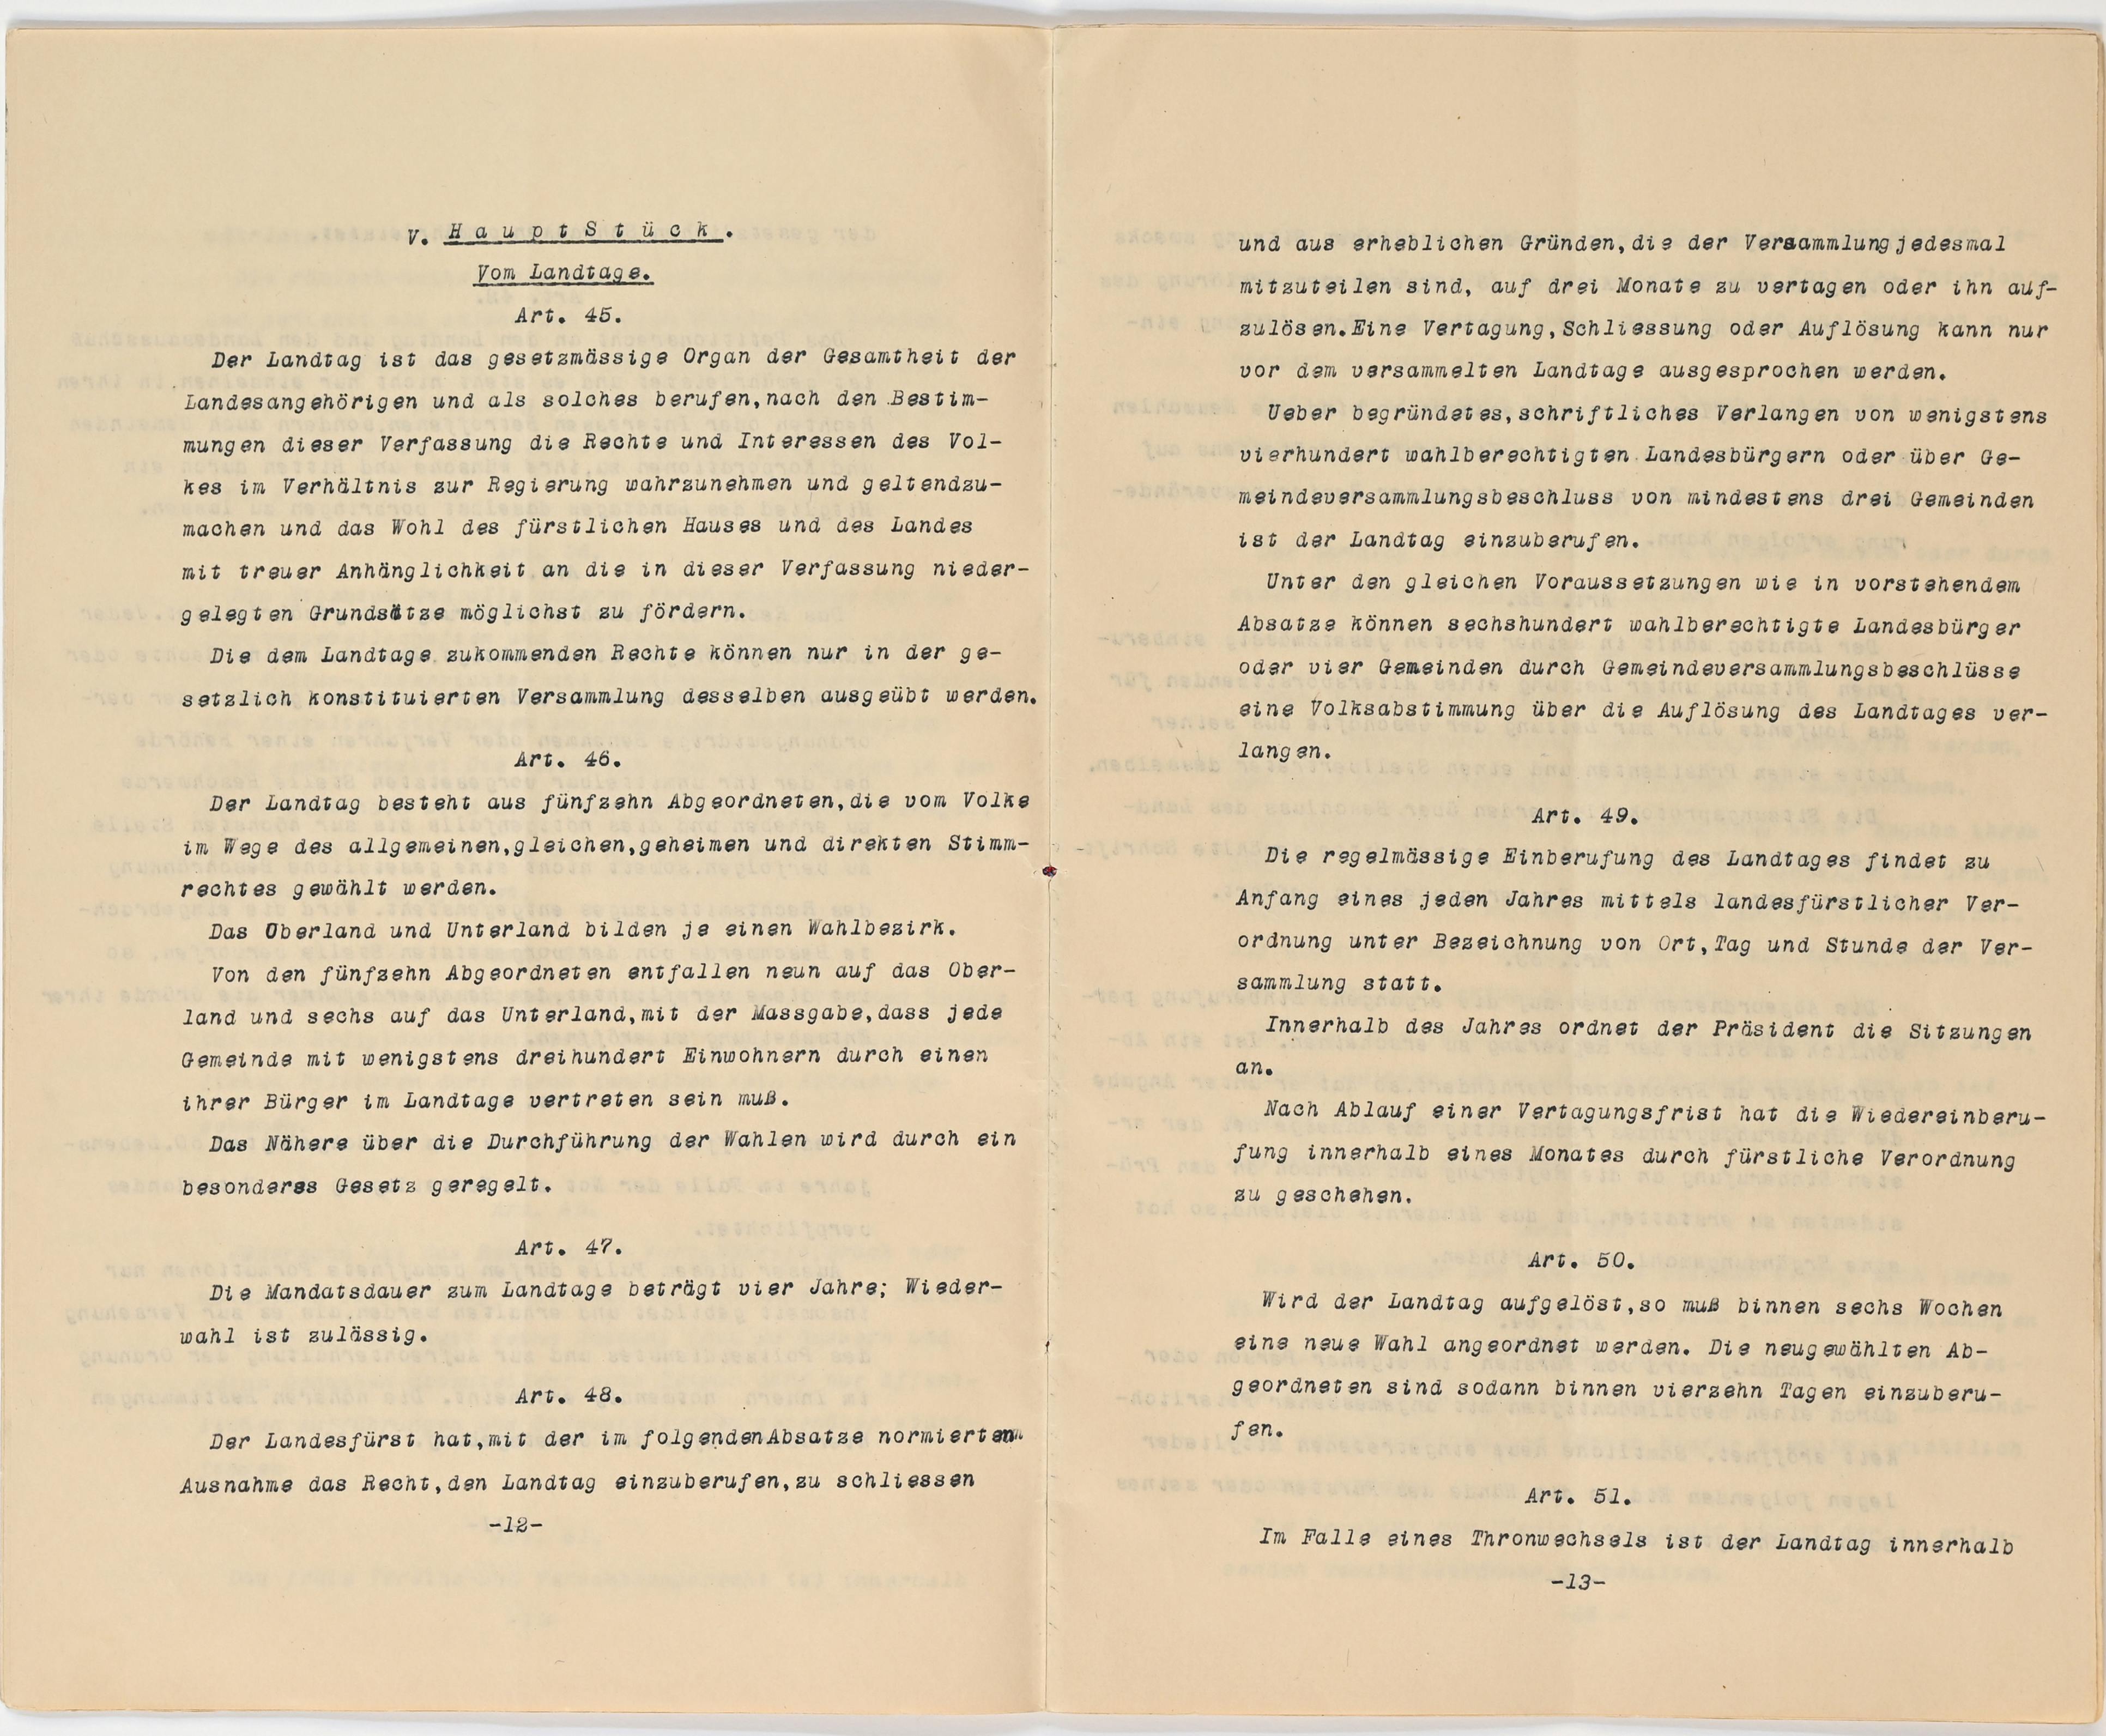 Verfassung 1921 Art. 45 bis Art. 51